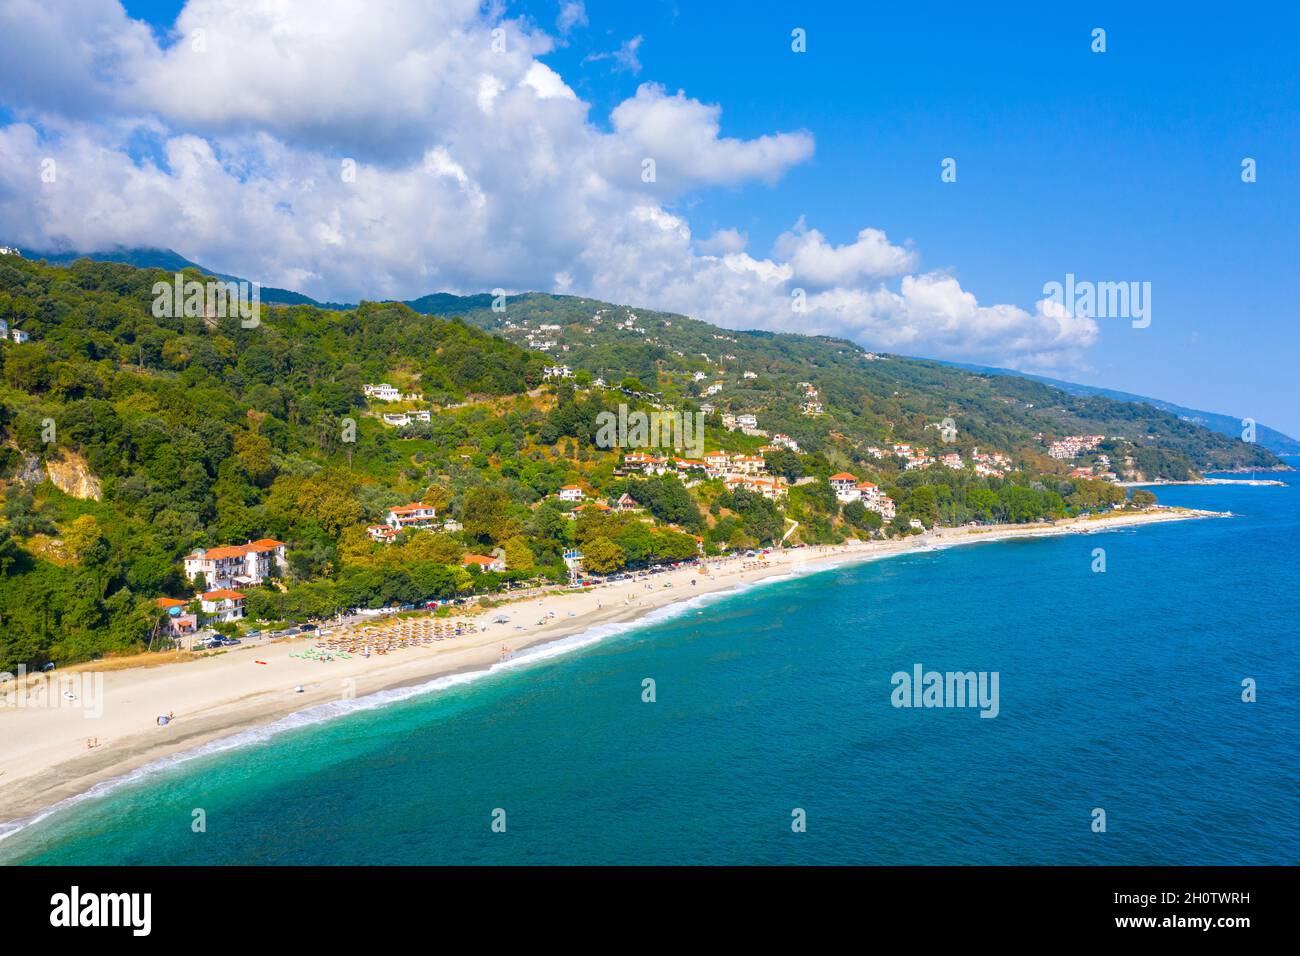 Famous village of Agios Ioannis, Pelion, Greece Stock Photo - Alamy